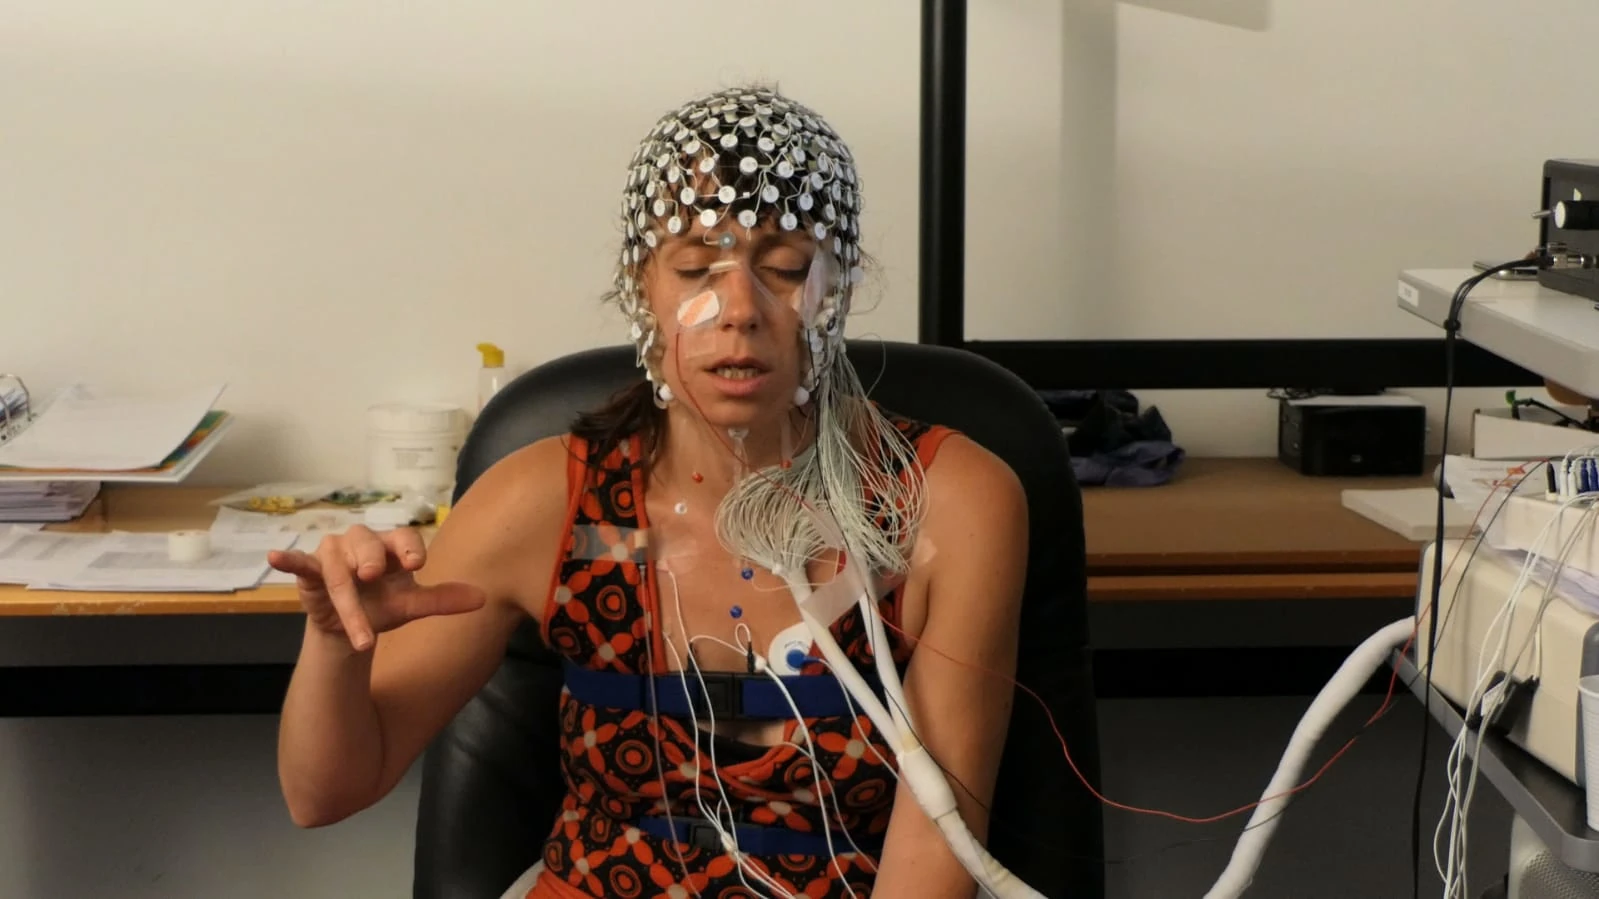 Electro EEG trance state